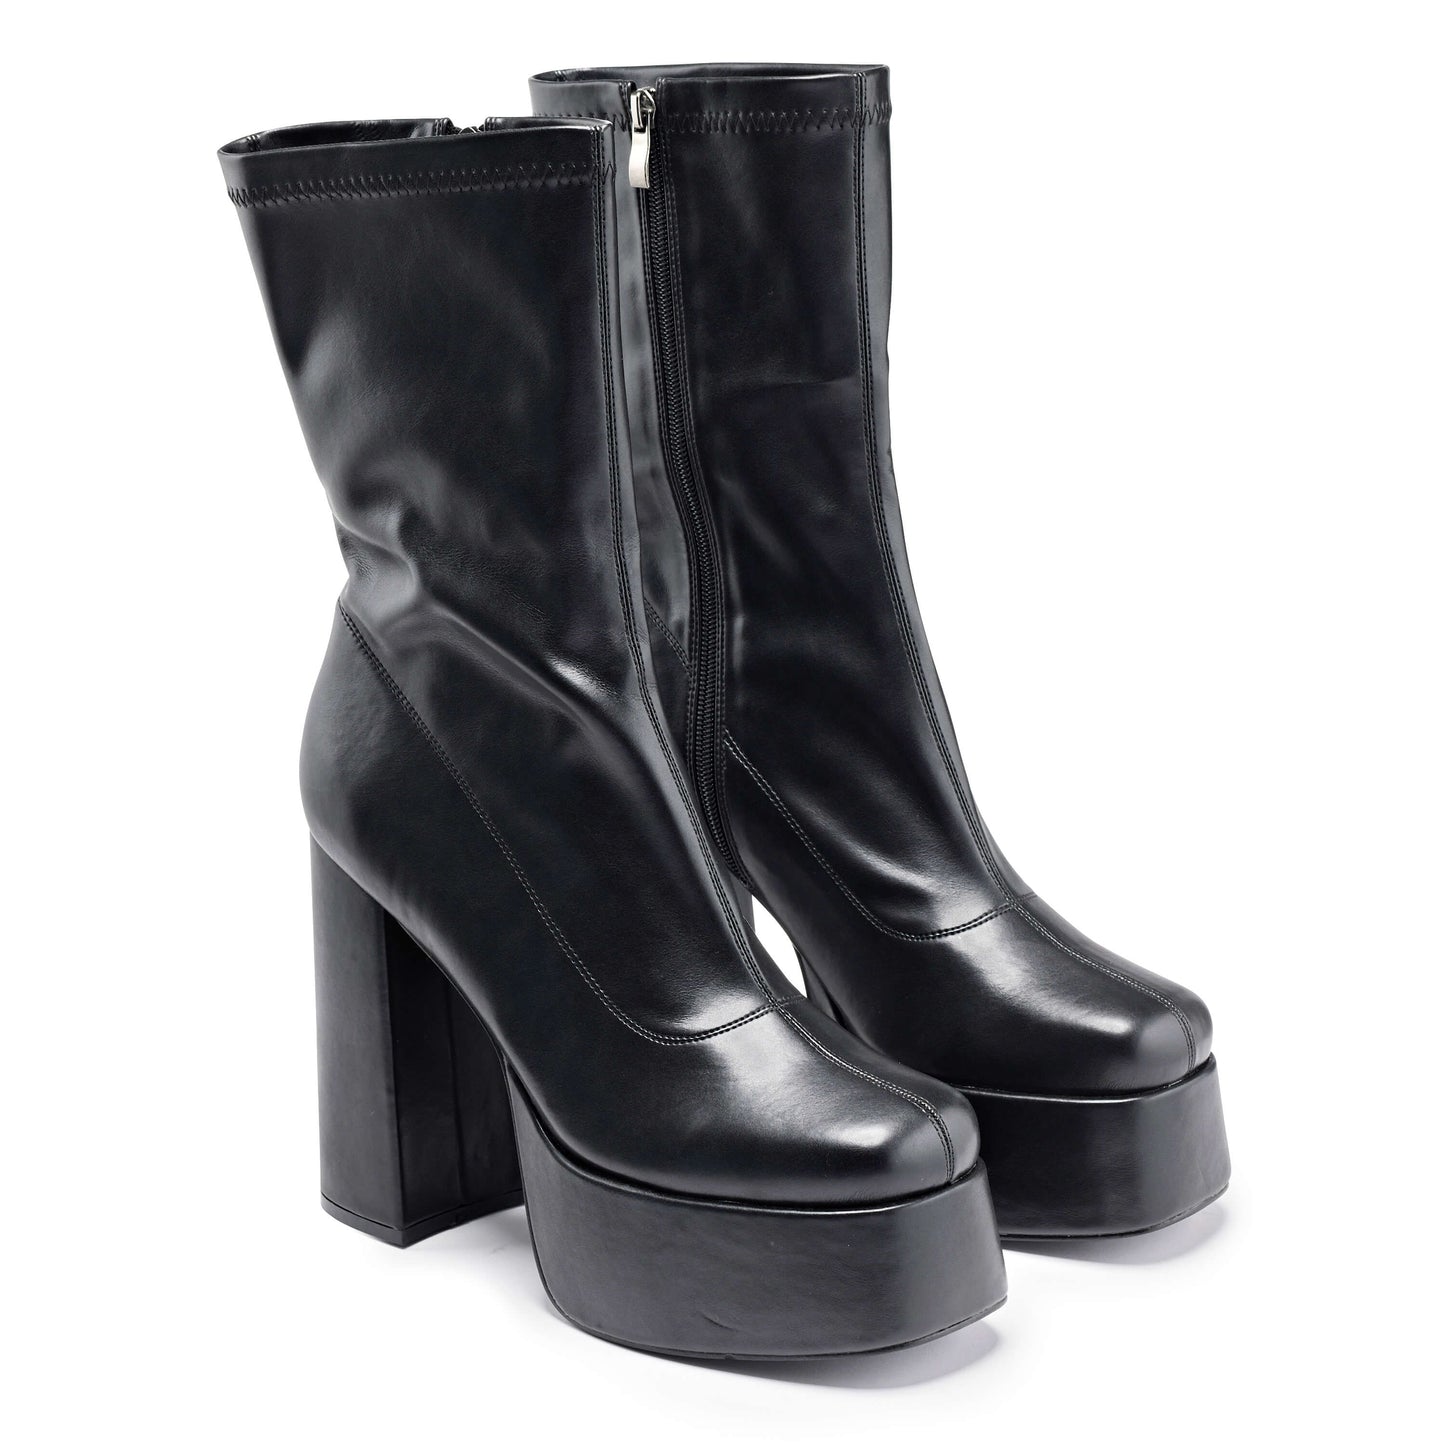 Delano Men's Black Platform Heeled Boots - Ankle Boots - KOI Footwear - Black - Three-Quarter View